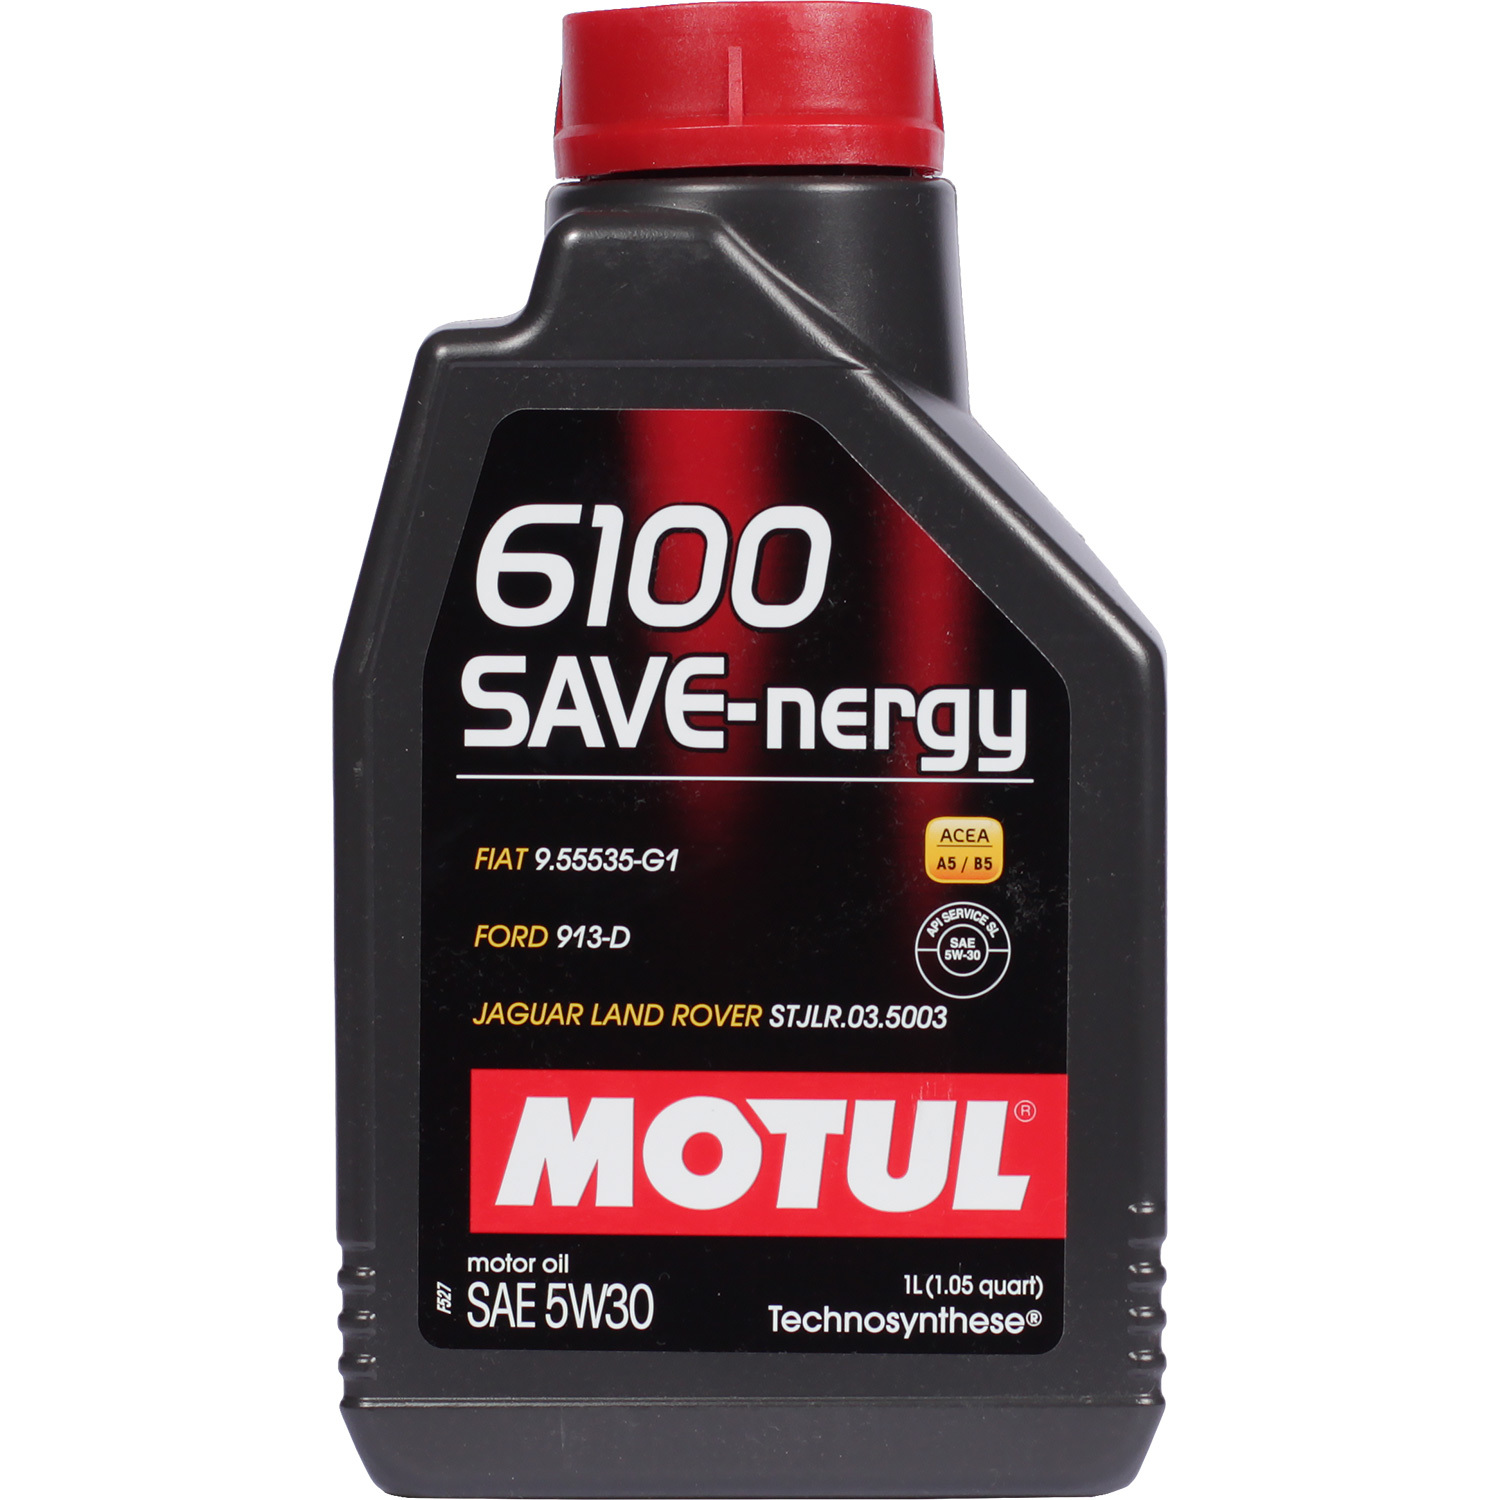 Motul Моторное масло Motul 6100 SAVE-NERGY 5W-30, 1 л motul моторное масло motul 6100 synergie 5w 30 4 л